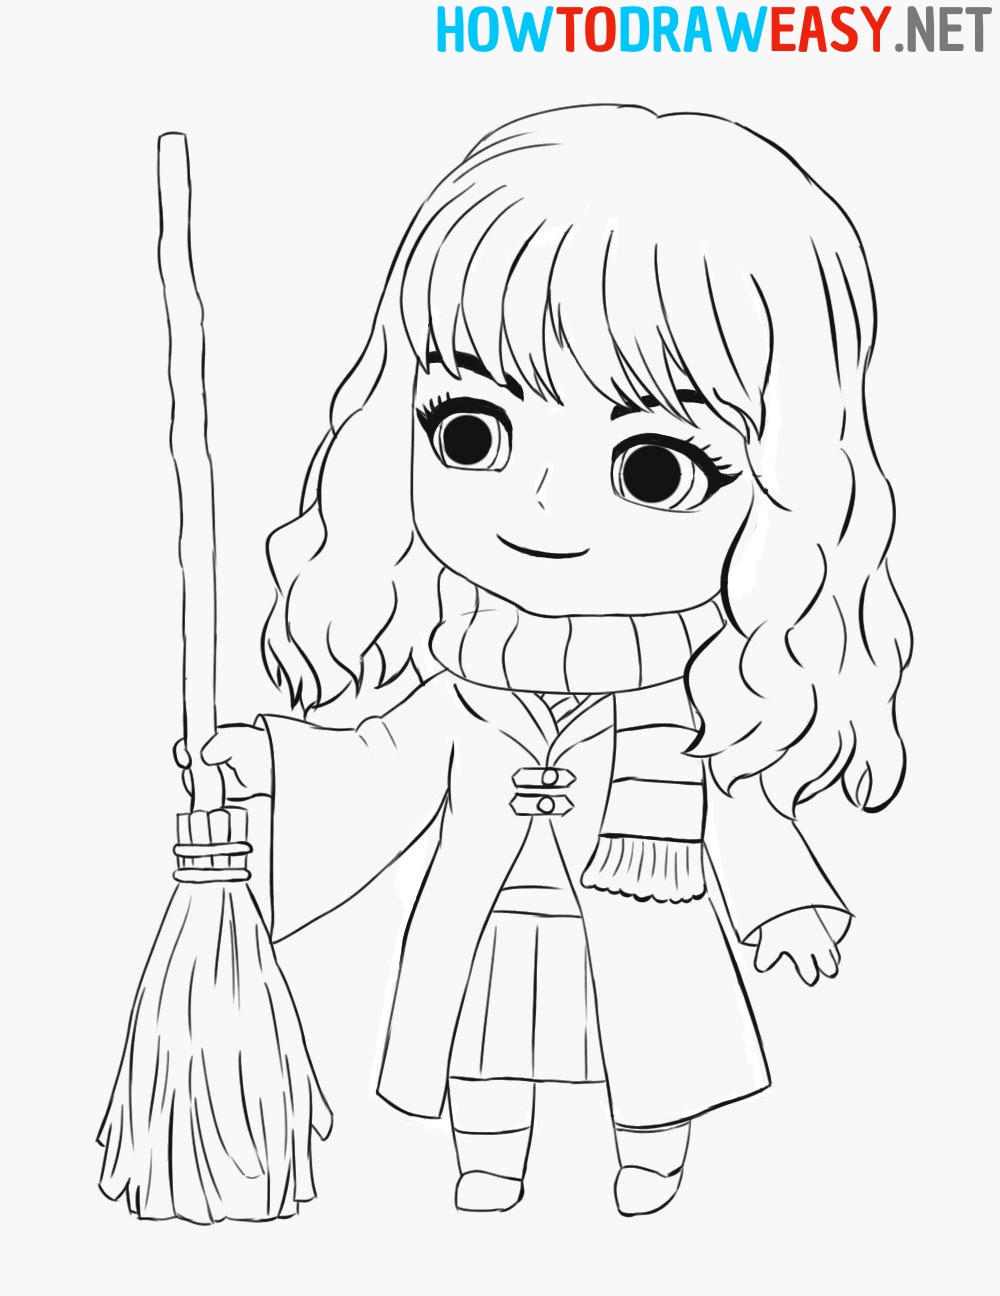 How to Draw Cartoon Hermione Granger